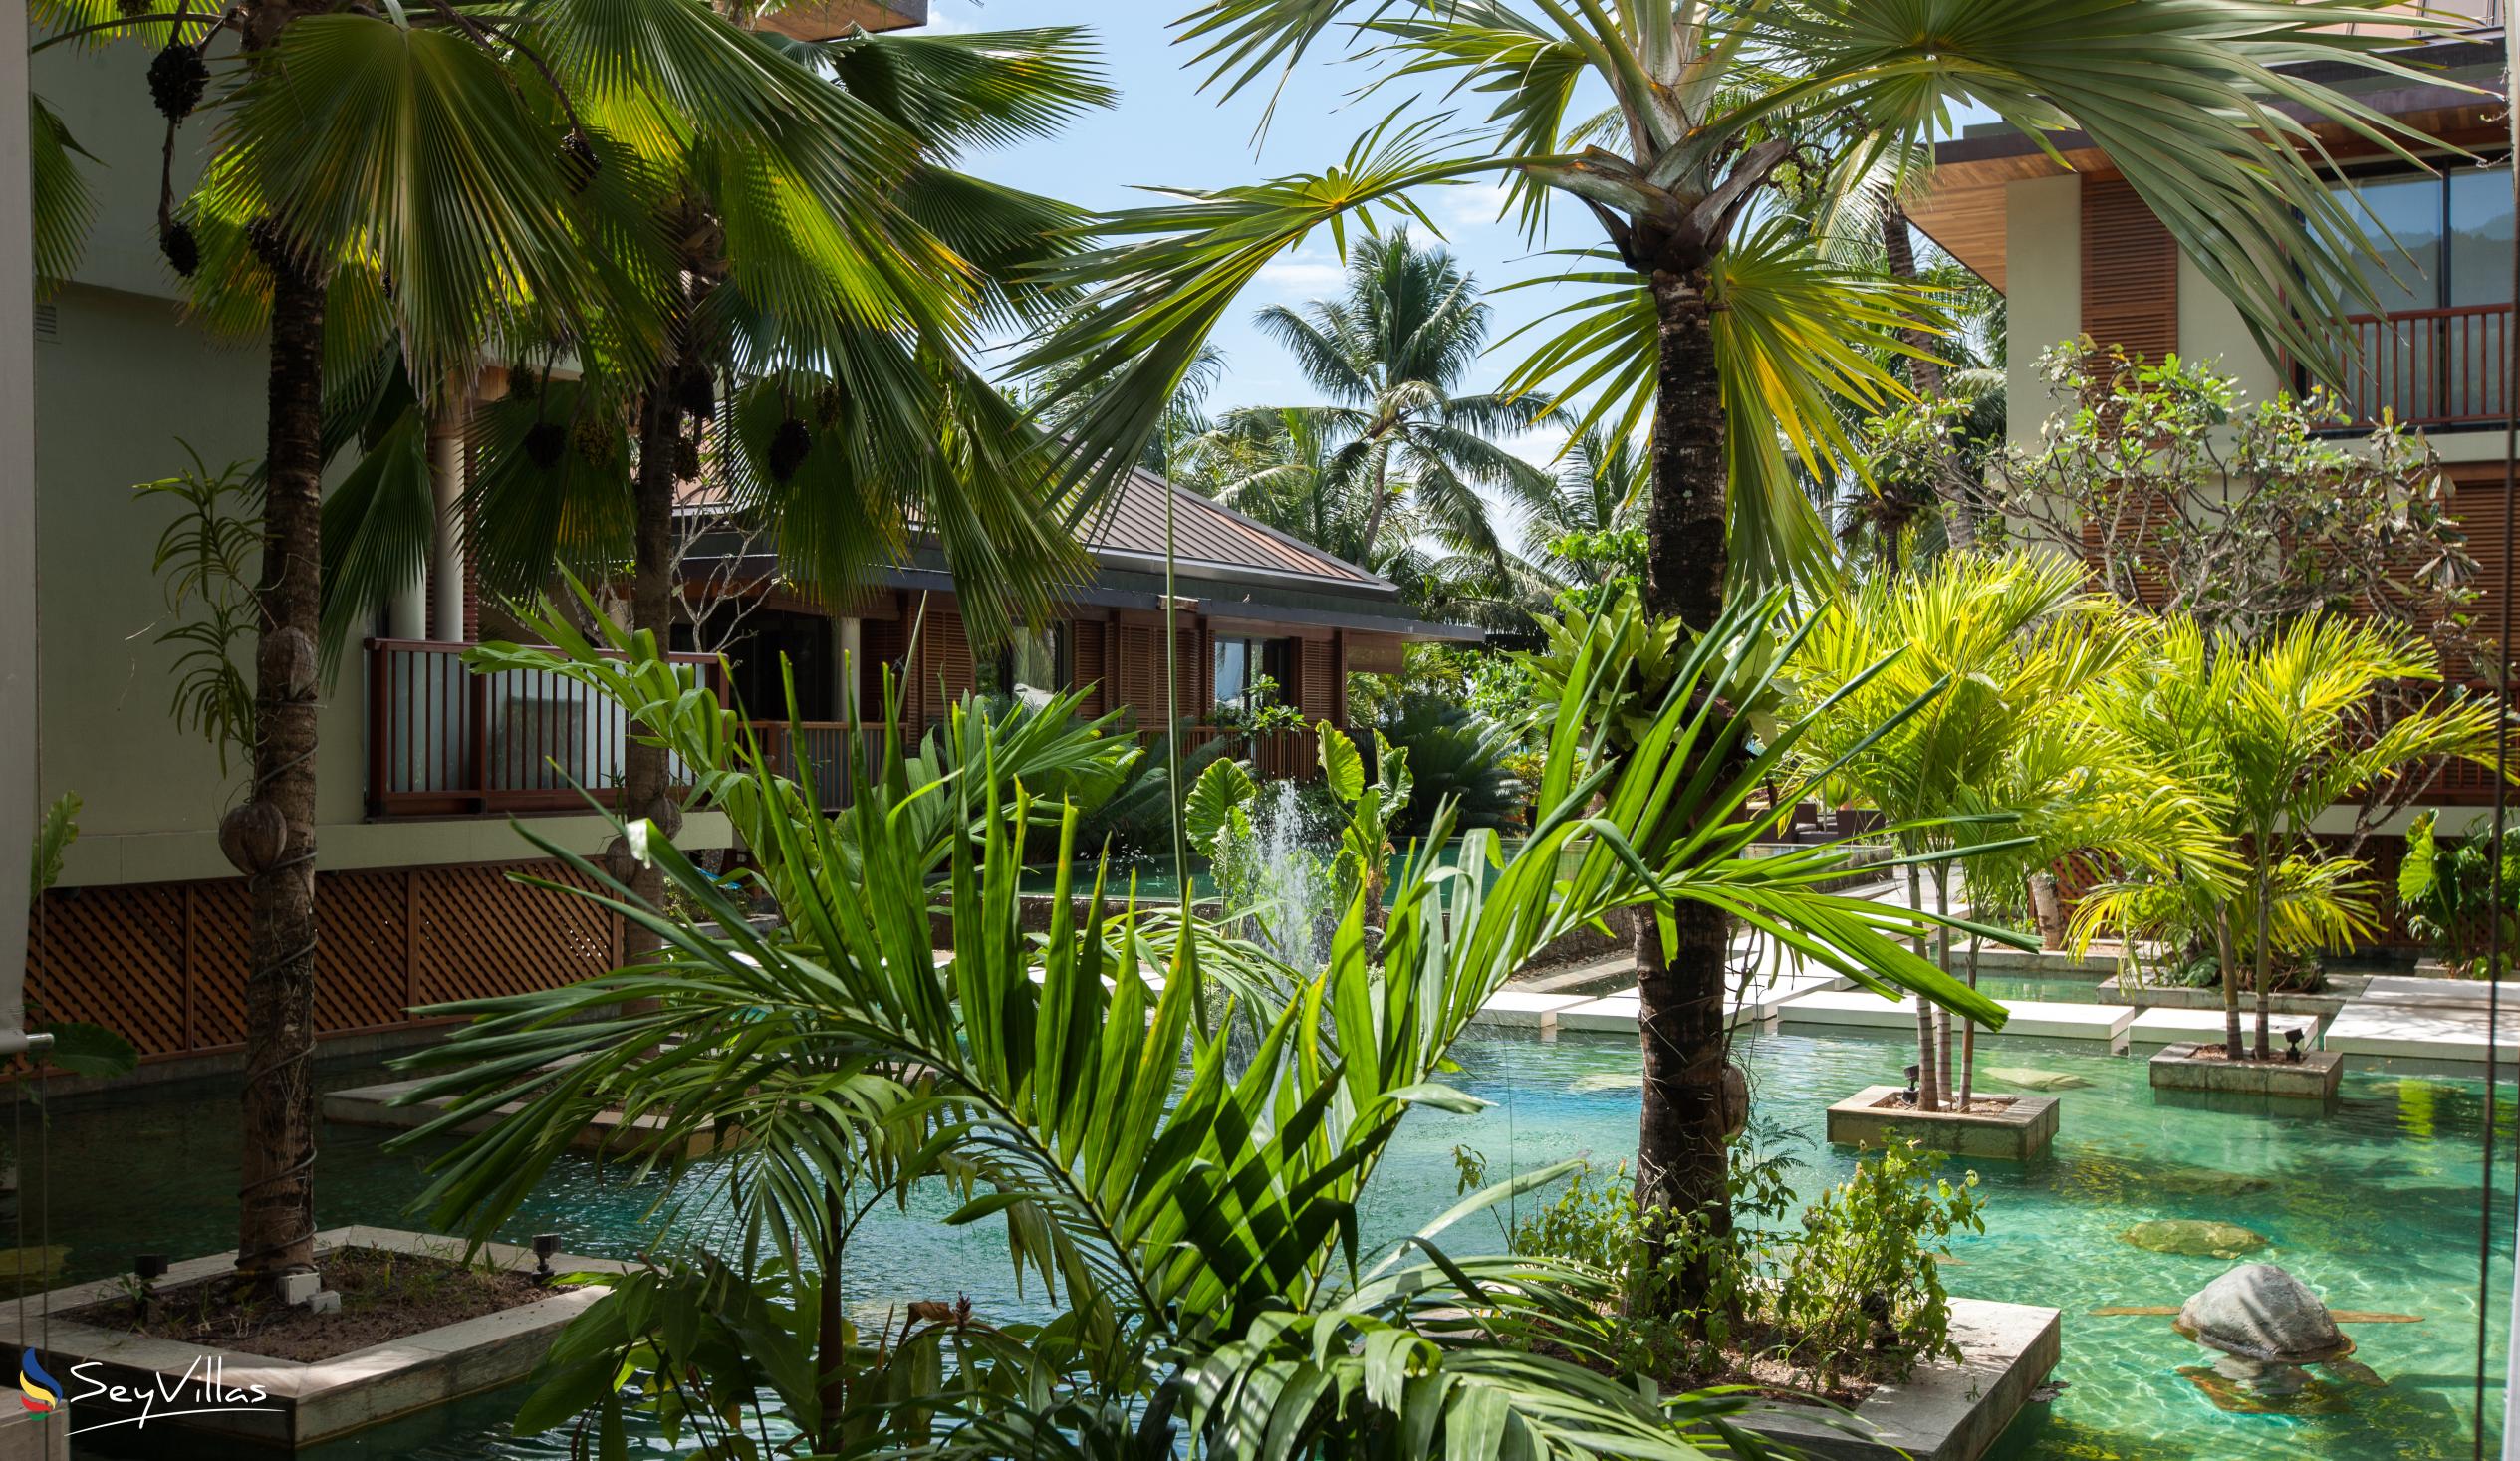 Photo 12: Dhevatara Beach Hotel - Outdoor area - Praslin (Seychelles)